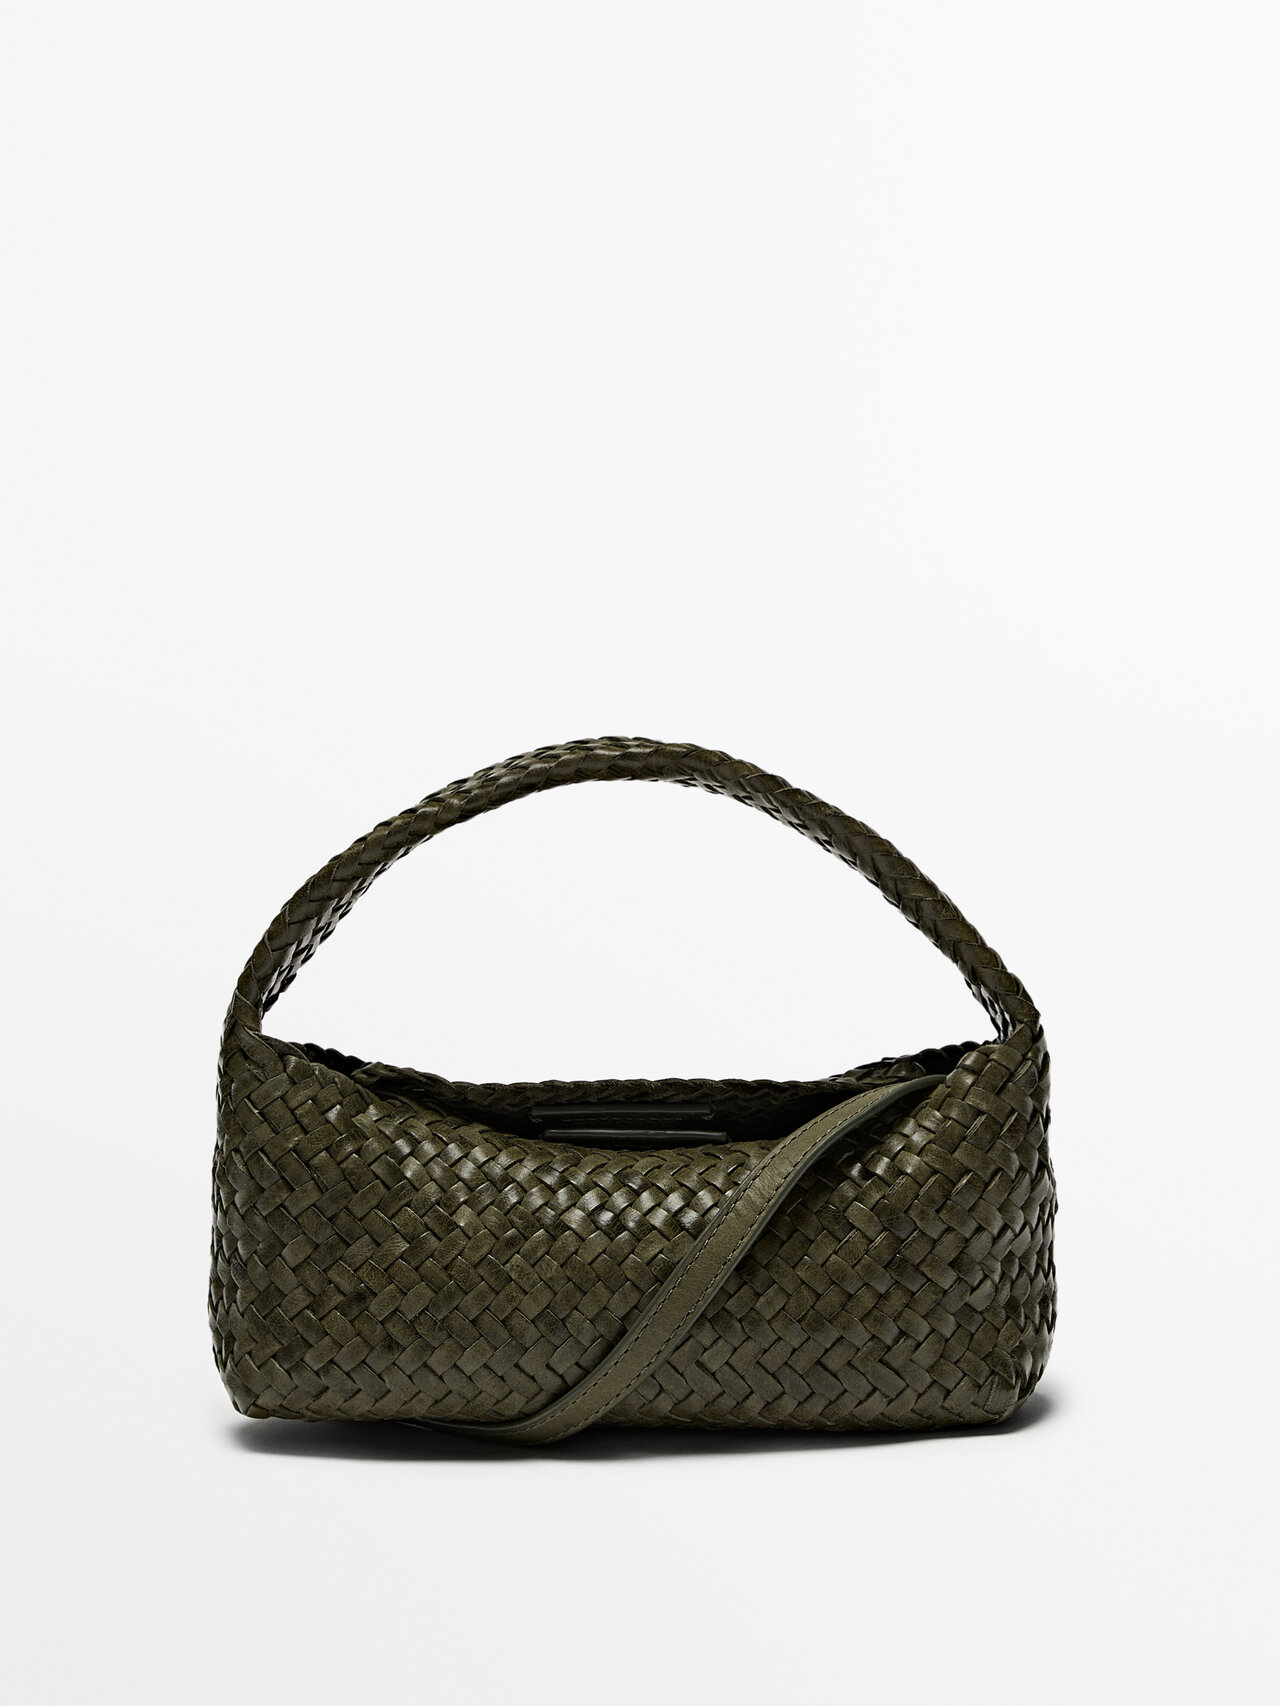 Massimo Dutti Woven Nappa Leather Mini Bag In Green